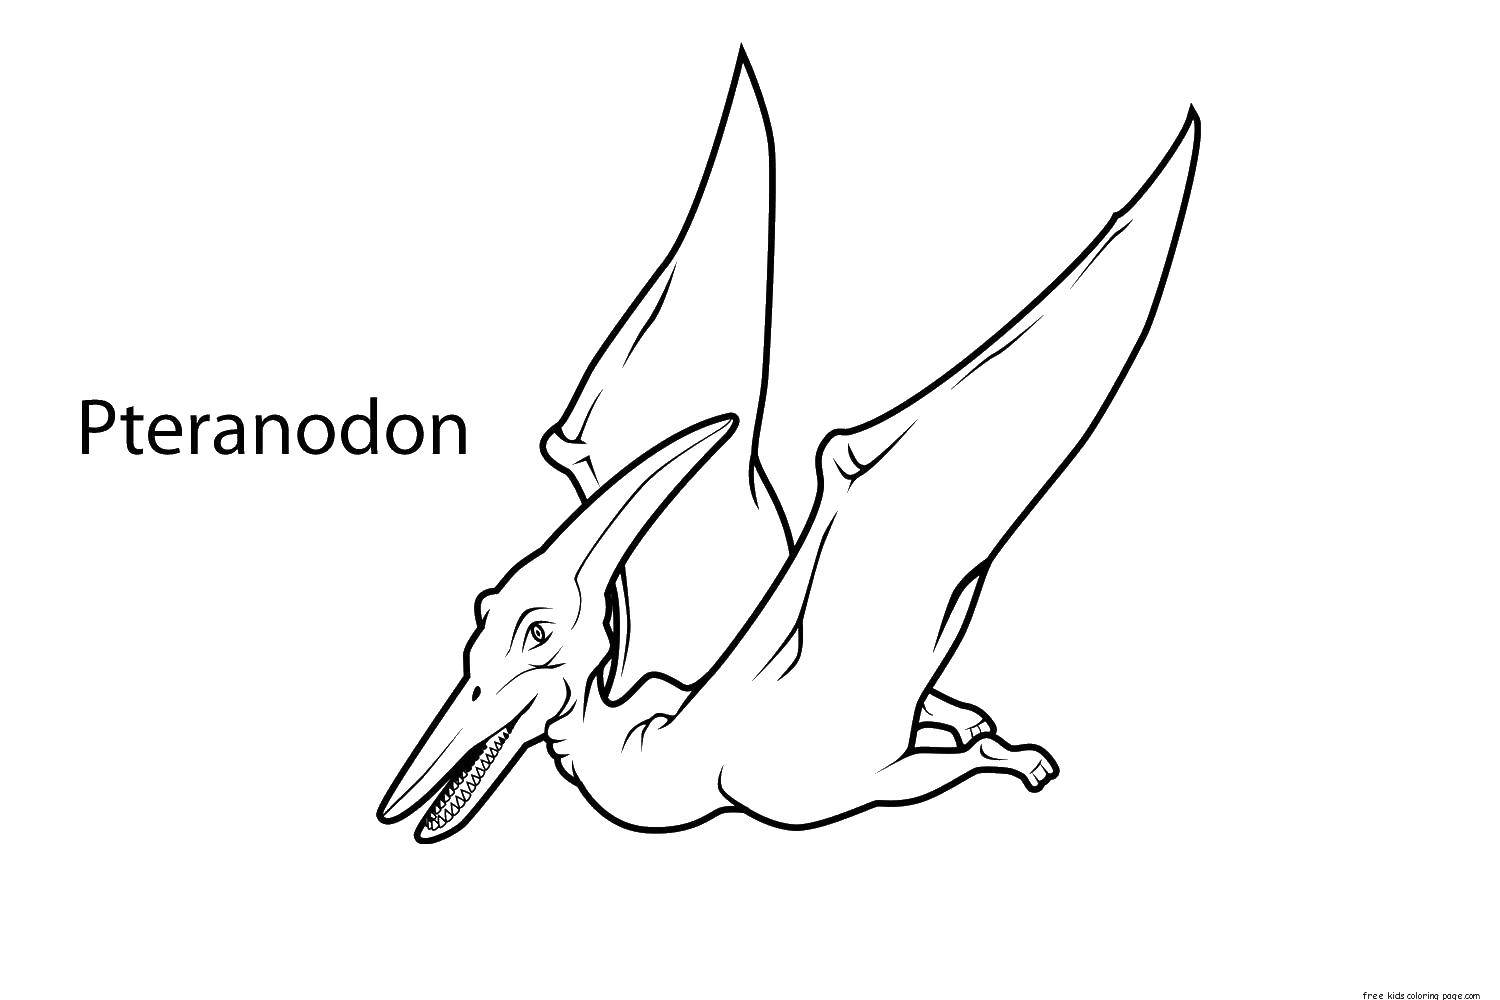 Coloring Pteranodon. Category dinosaur. Tags:  Dinosaurs.